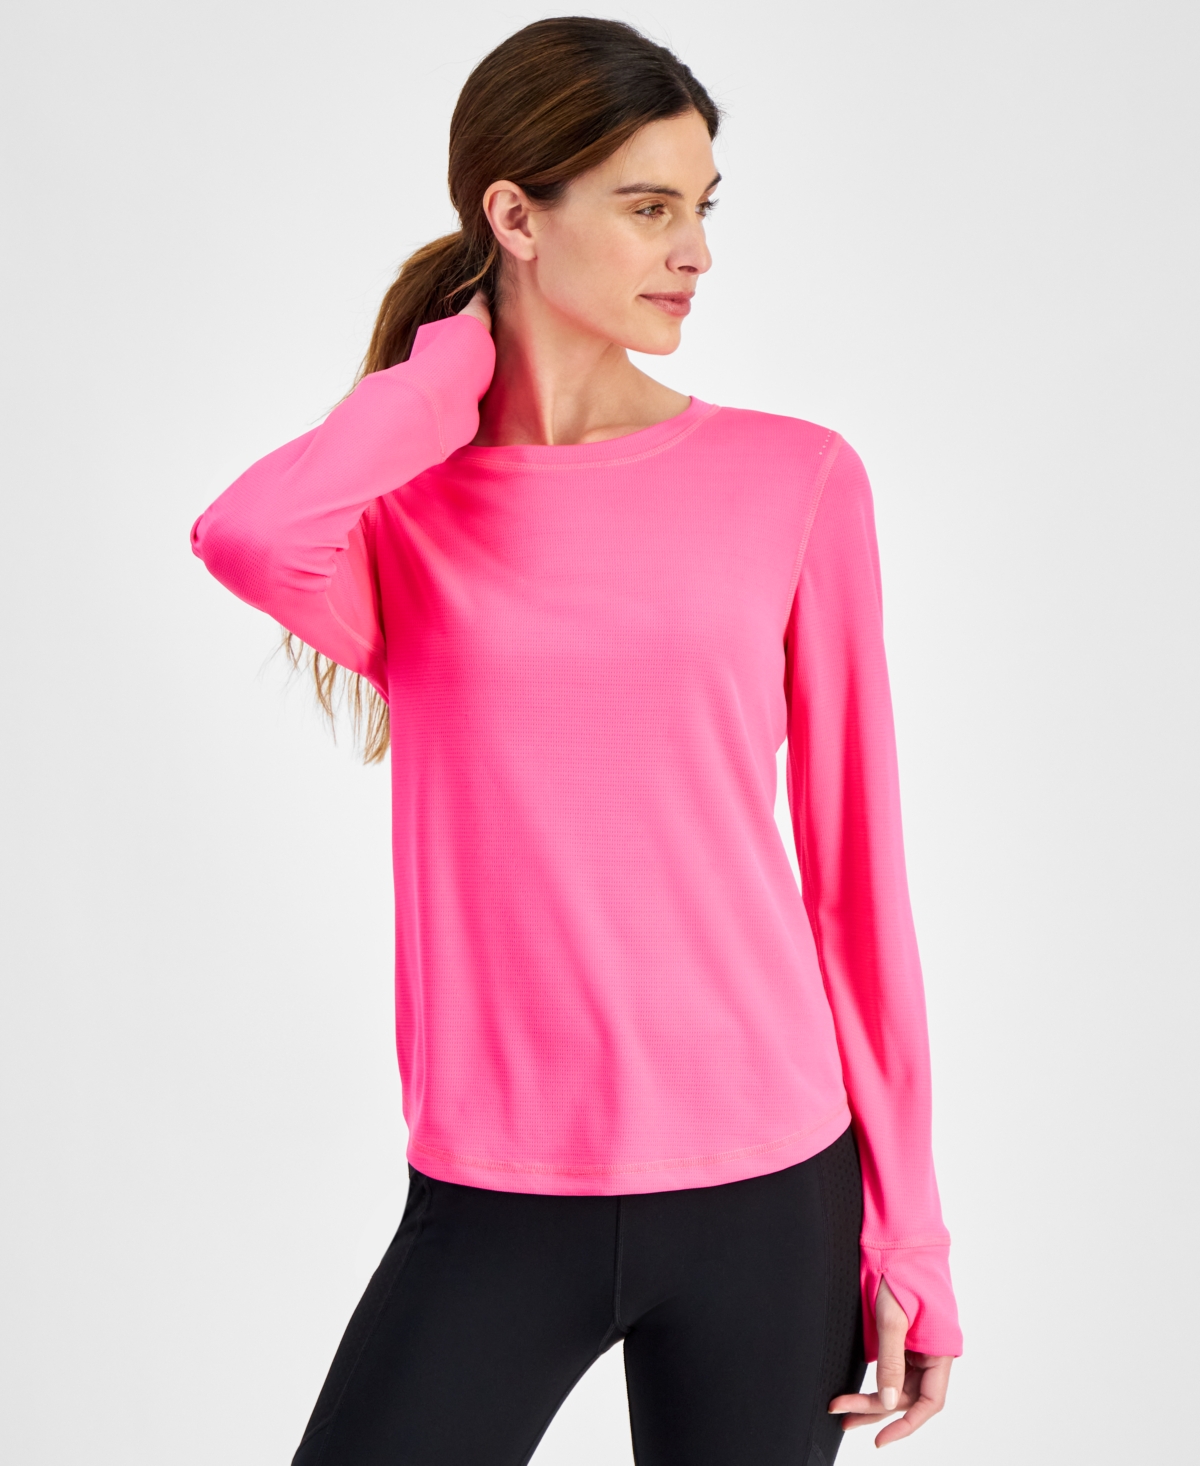 Women's Birdseye Mesh Long-Sleeve, Created for Macy's - Molten Pink